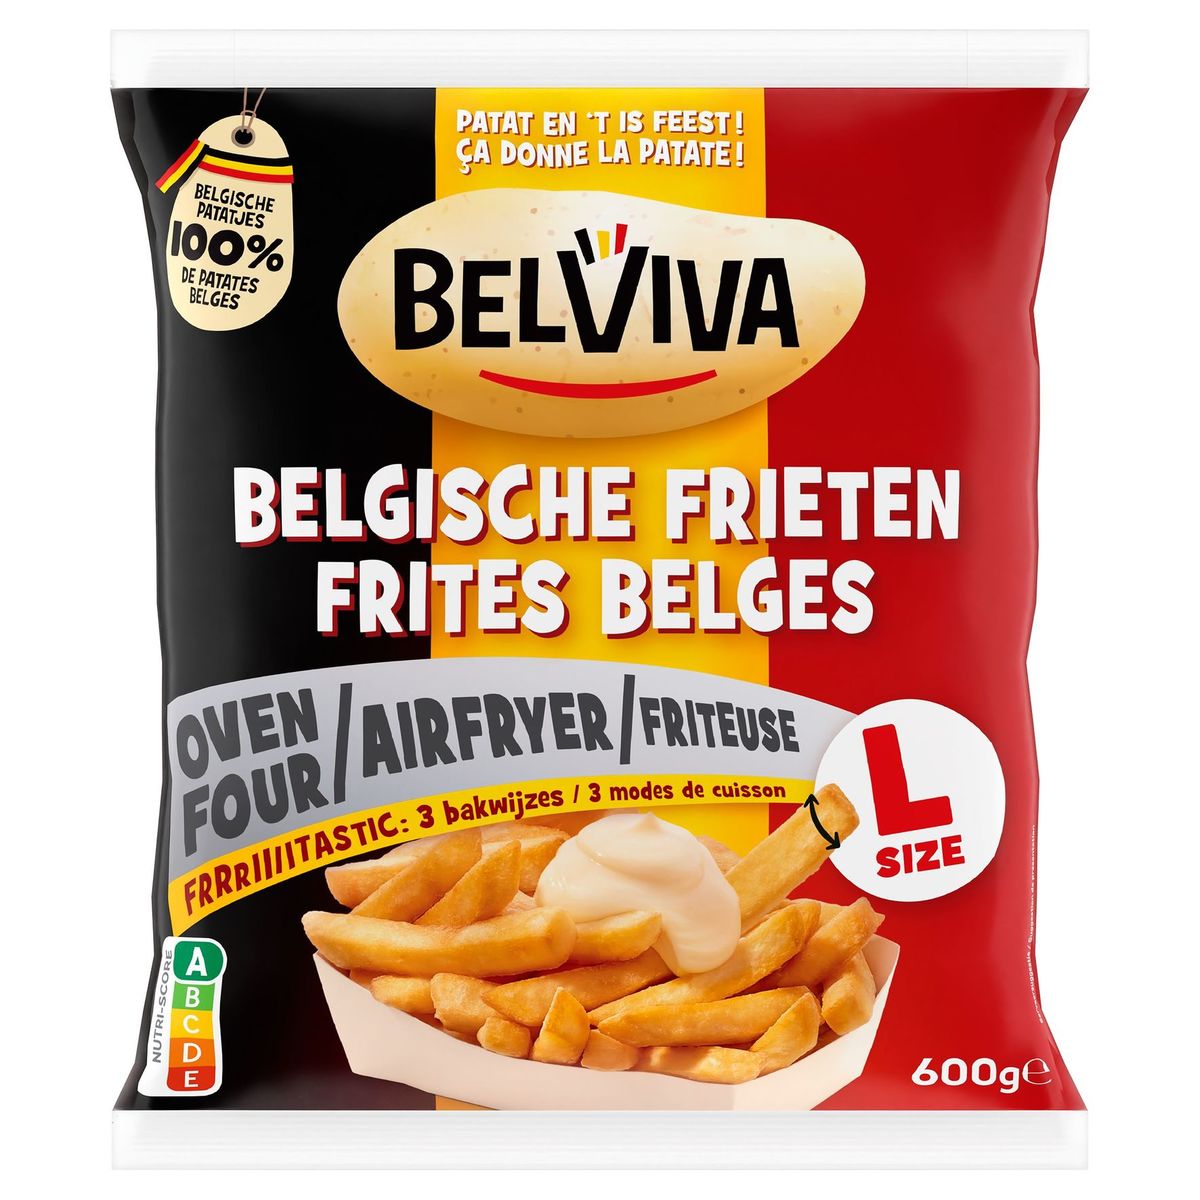 Belviva Belgische Frieten Oven Airfryer Friteuse L Size 600 g